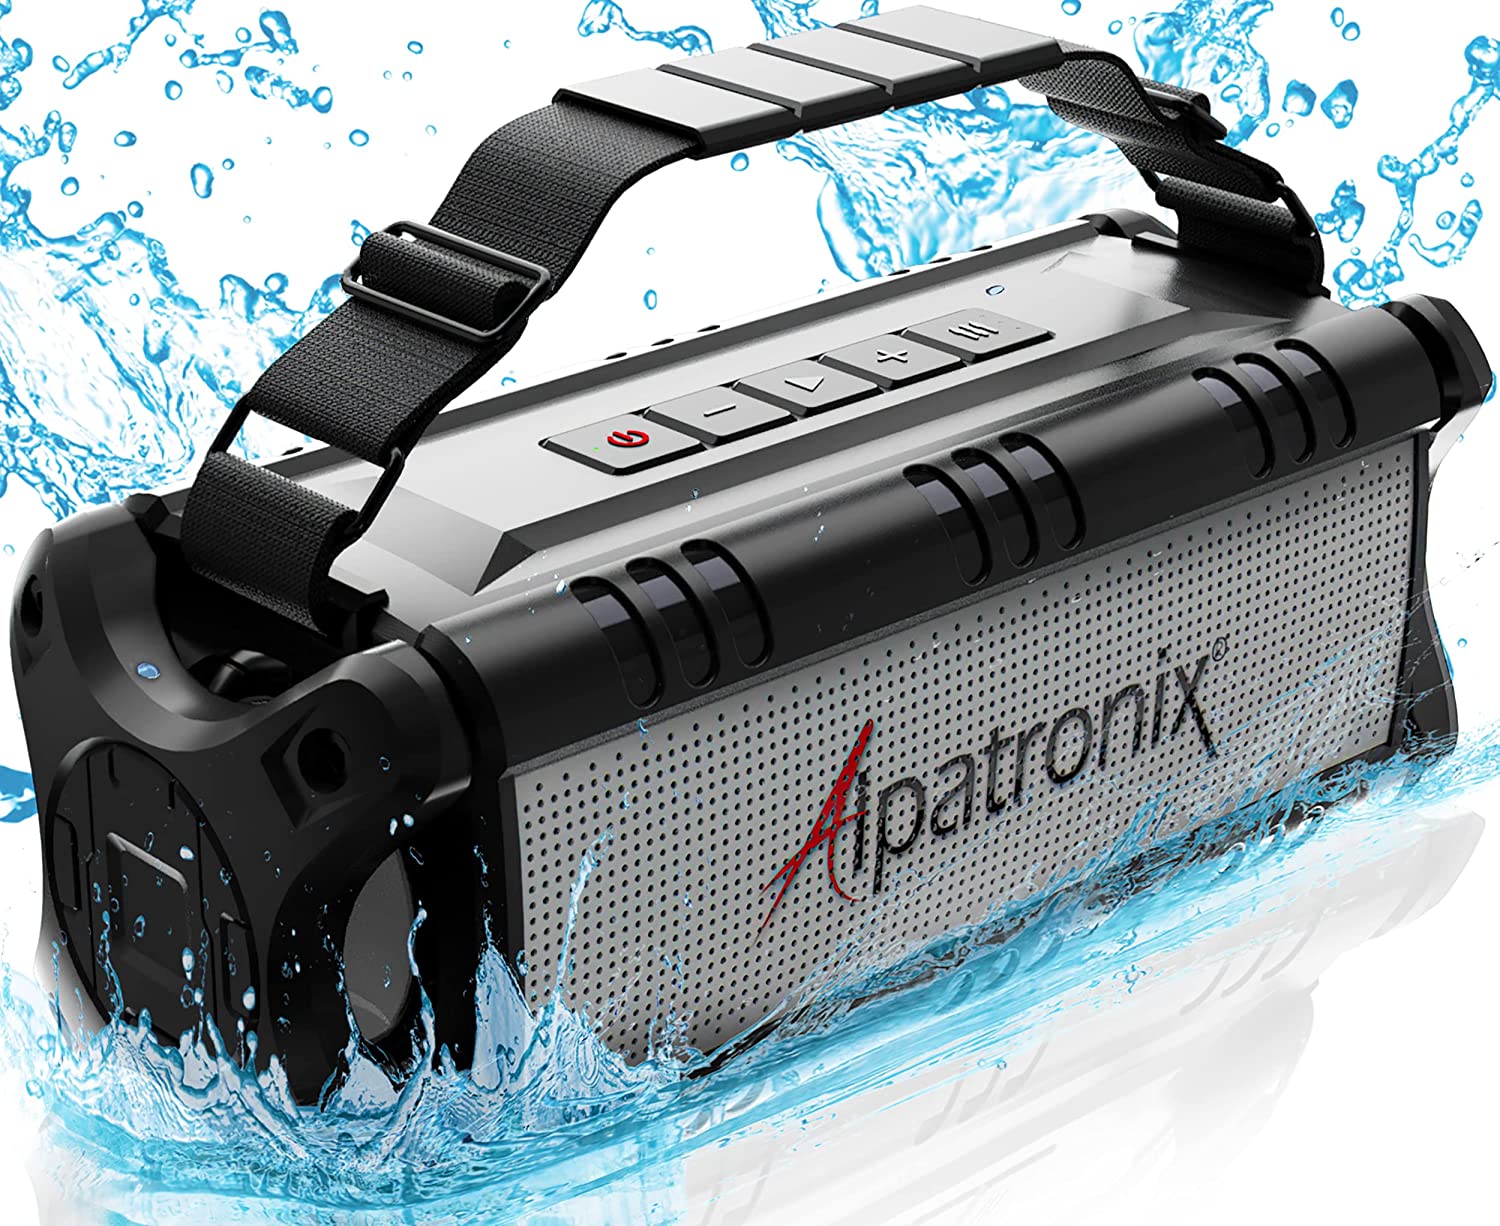 Alpatronix AX500